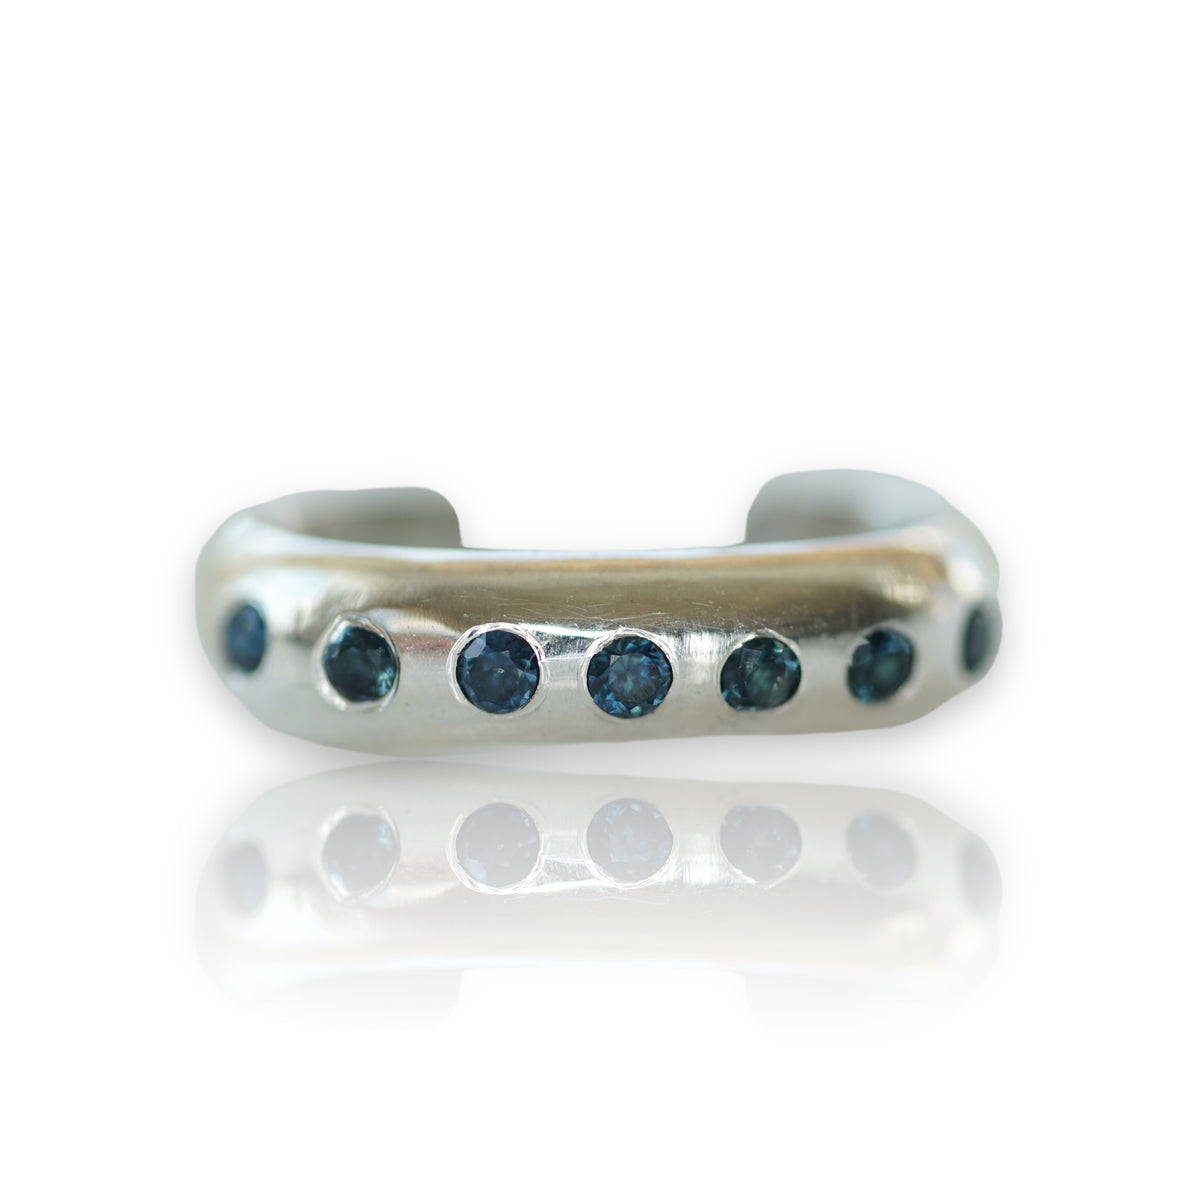 Blue sapphire ear cuff in silver